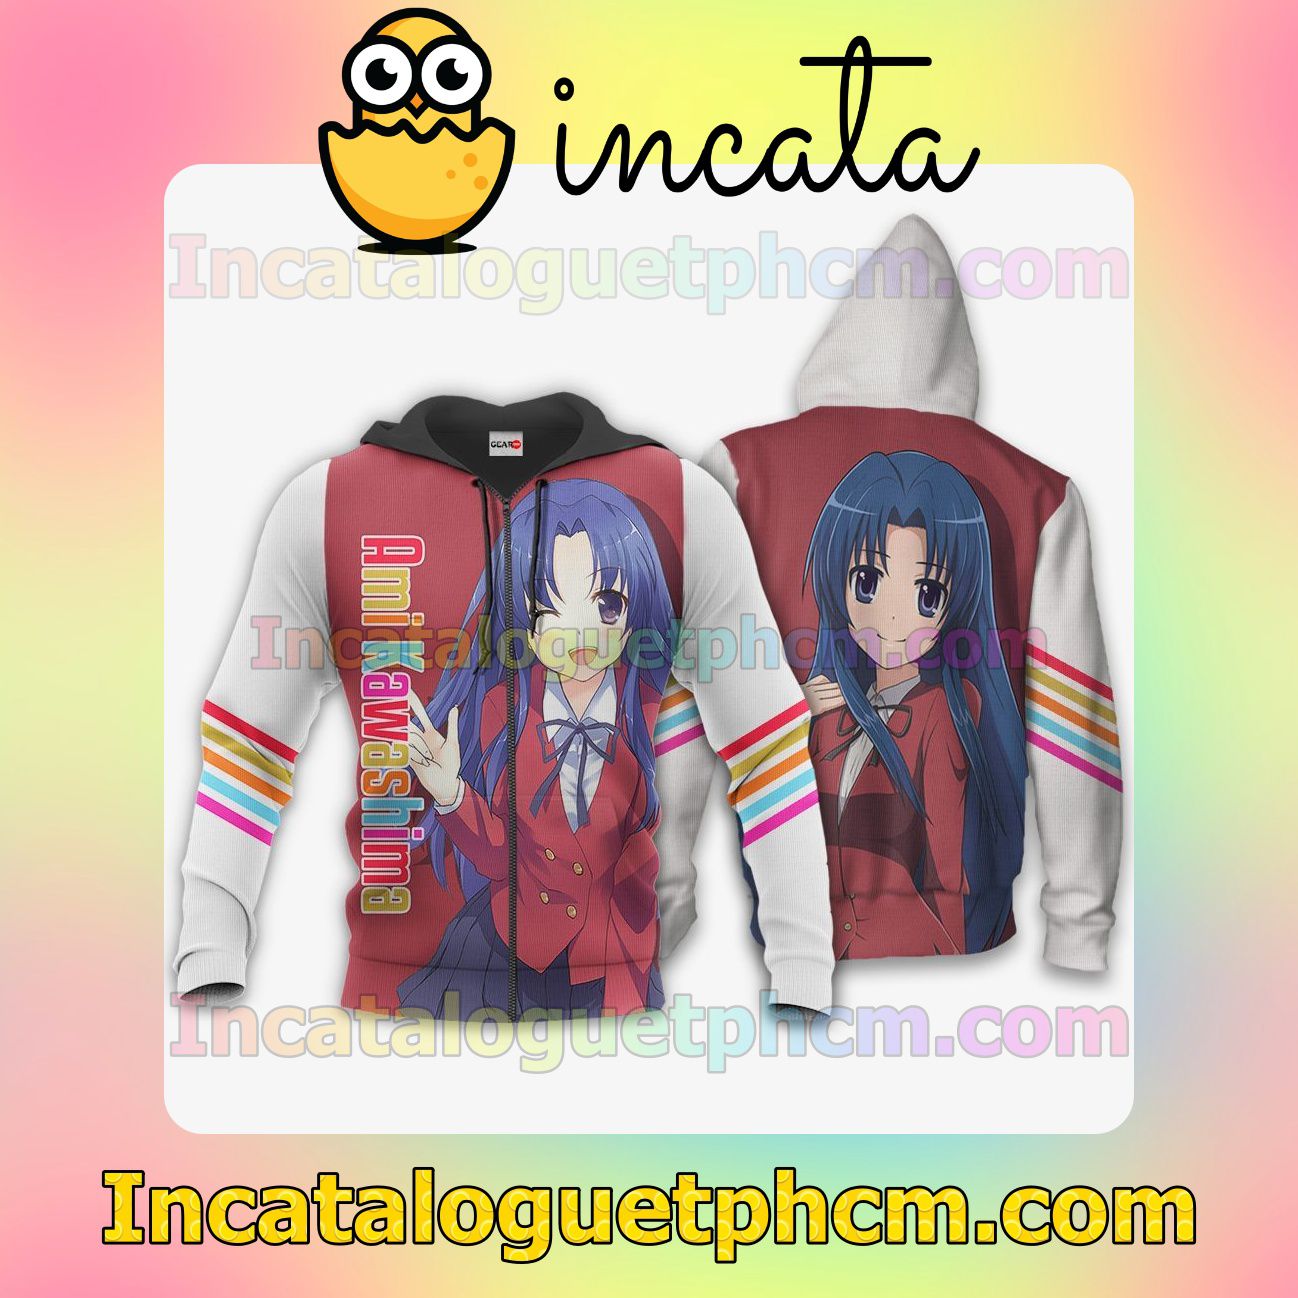 Toradora Ami Kawashima Anime Clothing Merch Zip Hoodie Jacket Shirts